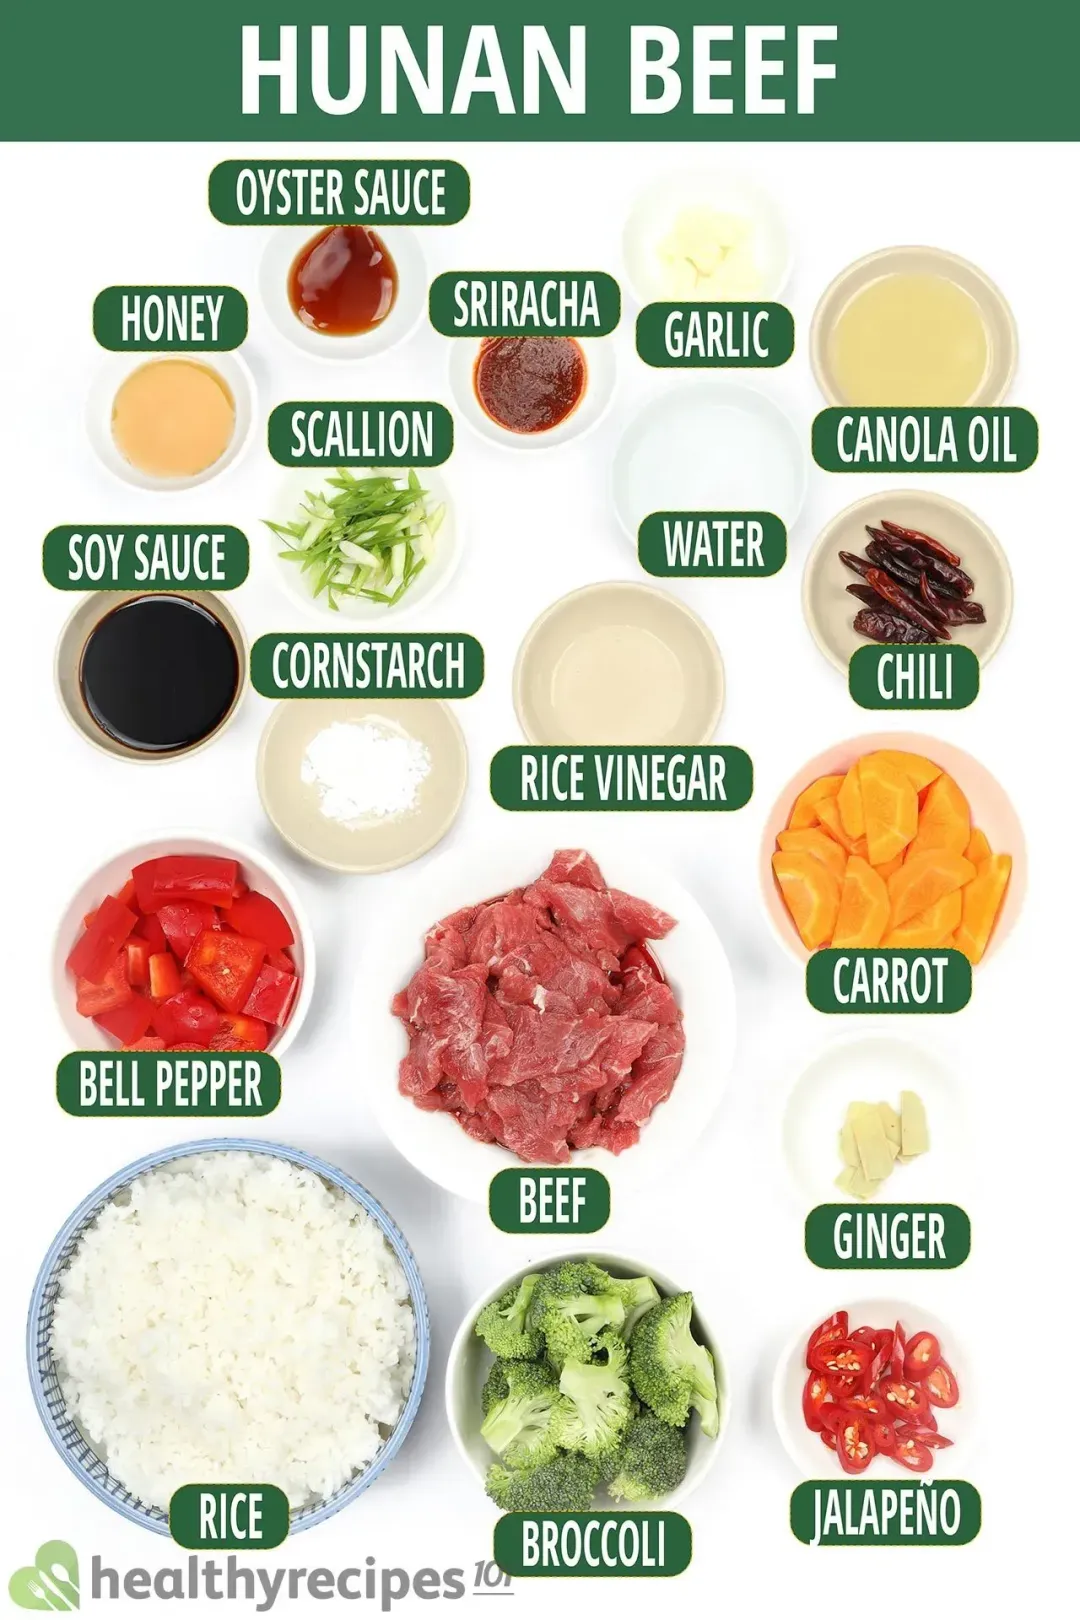 Ingredients for Hunan Beef